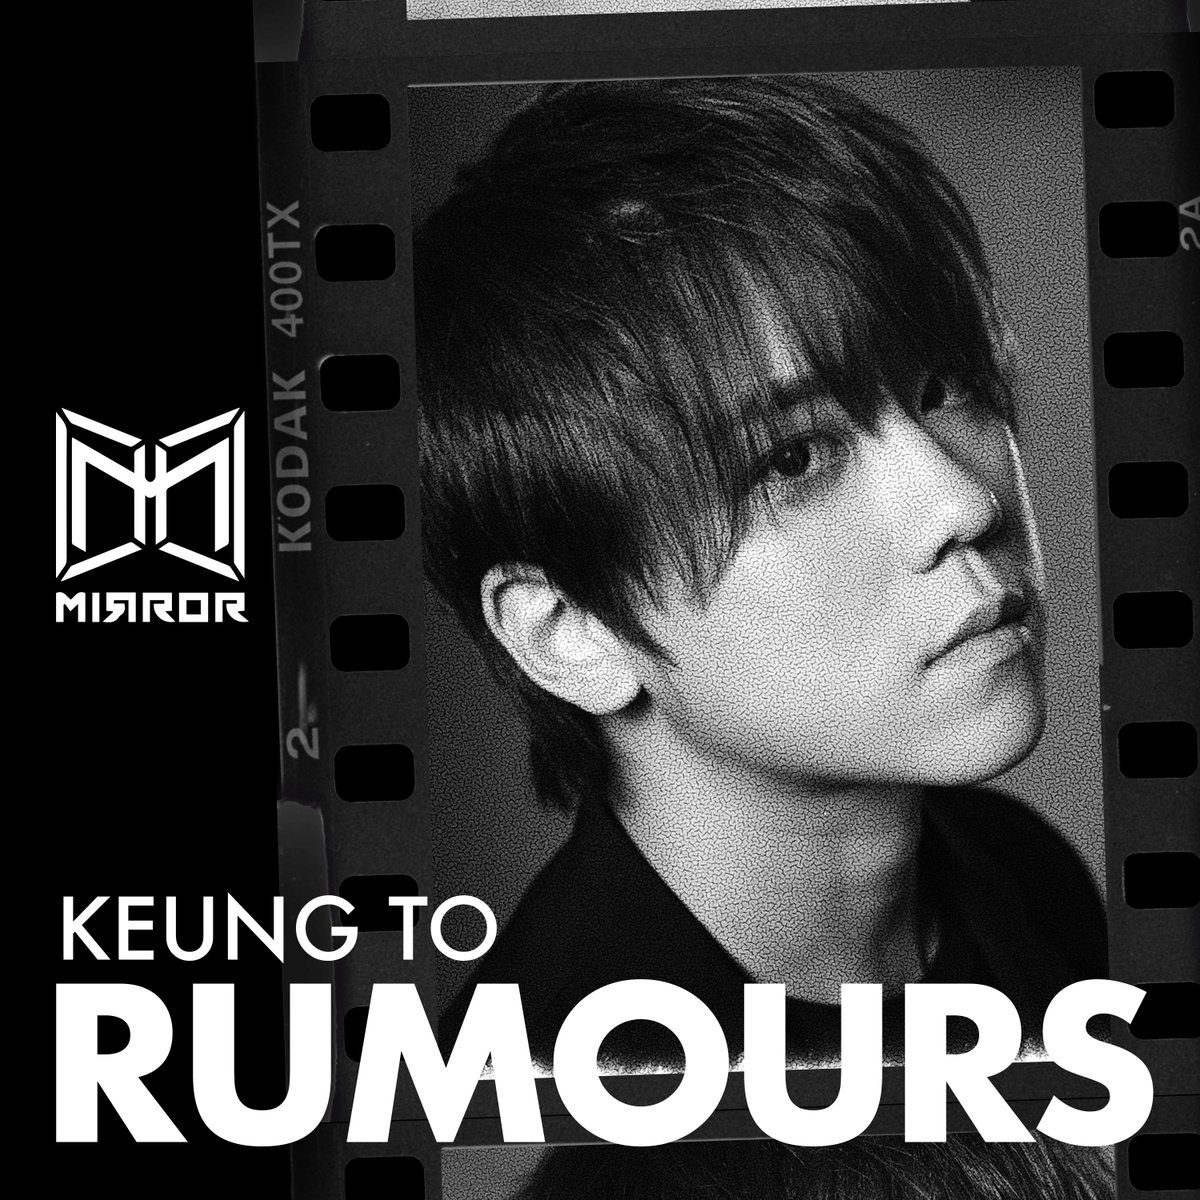 24 hours until RUMOURS Mirror.lnk.to/Rumours 
#mirrorrumours #mirrorweare